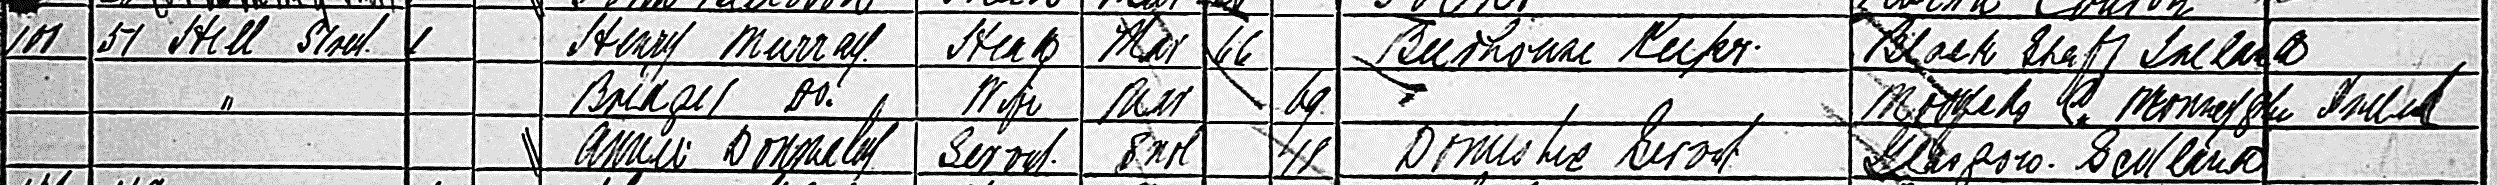 1881 04 03 Henry Murray Census crop